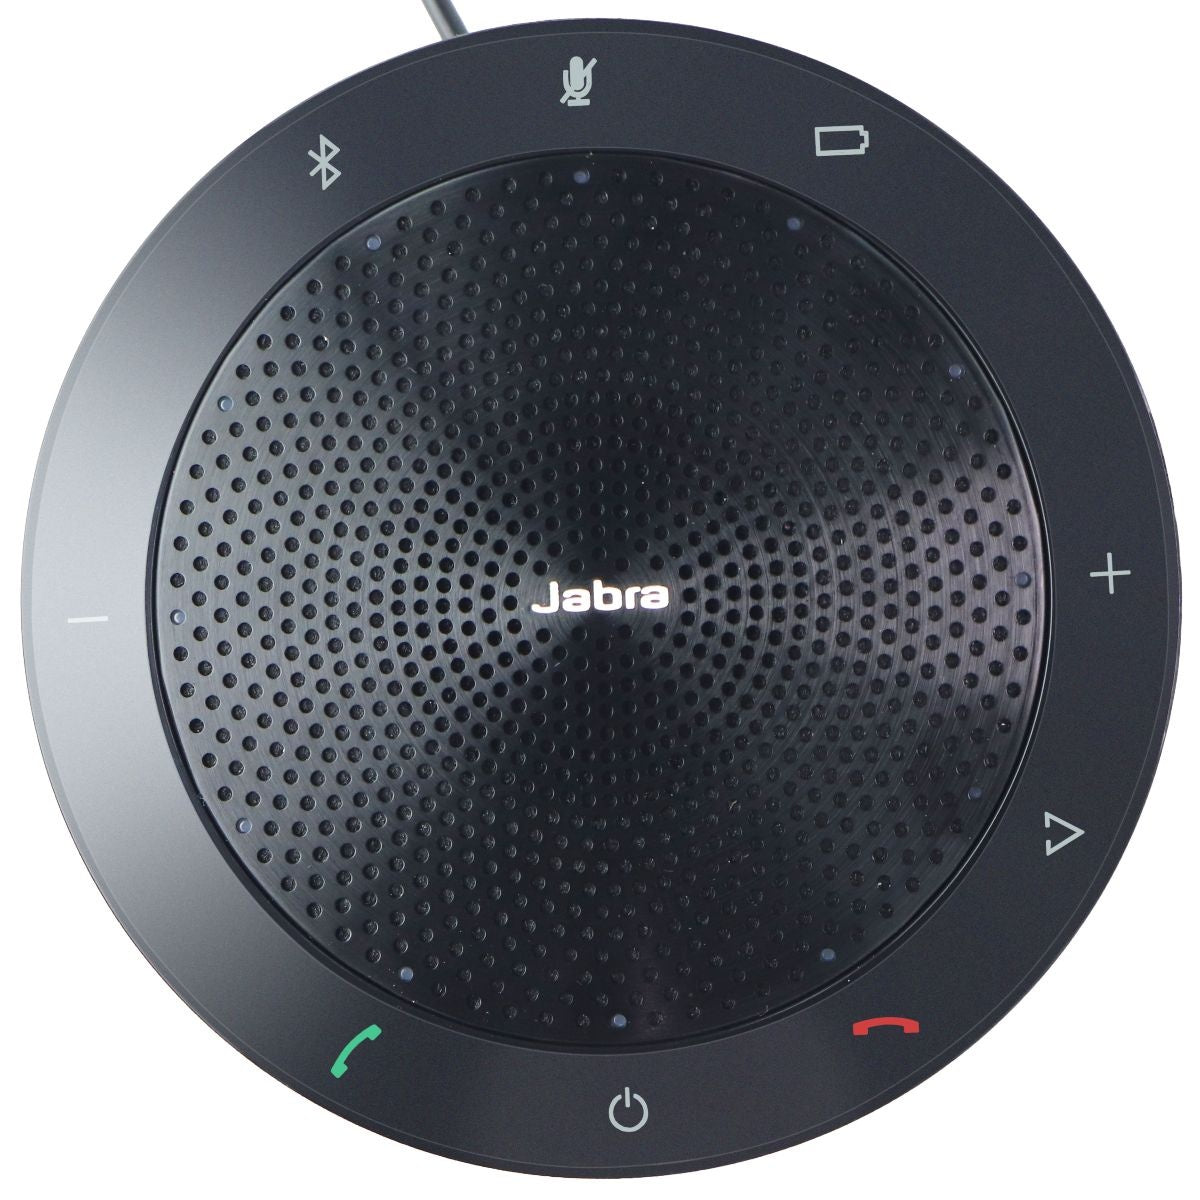 Jabra Speak 510 Bluetooth and USB Conference Speakerphone - Black Cell Phone - Audio Docks & Speakers Jabra    - Simple Cell Bulk Wholesale Pricing - USA Seller